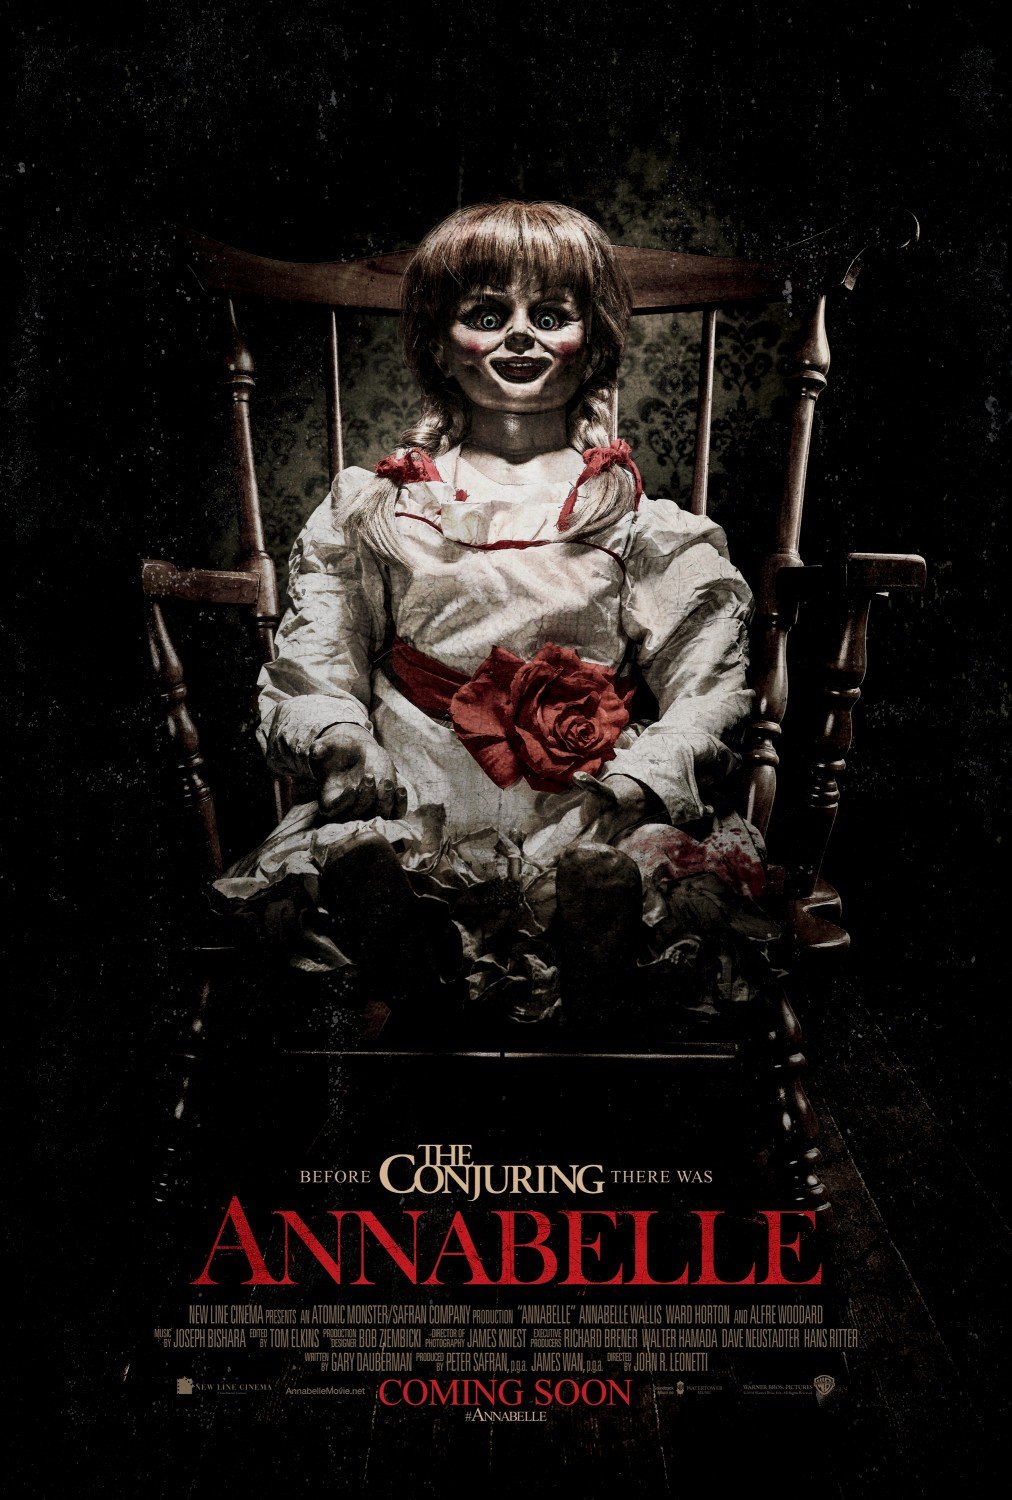 Annabelle 2 Online Subtitrat In Romana annabelle 2 streaming complet français – annabelle 2 film entier vf